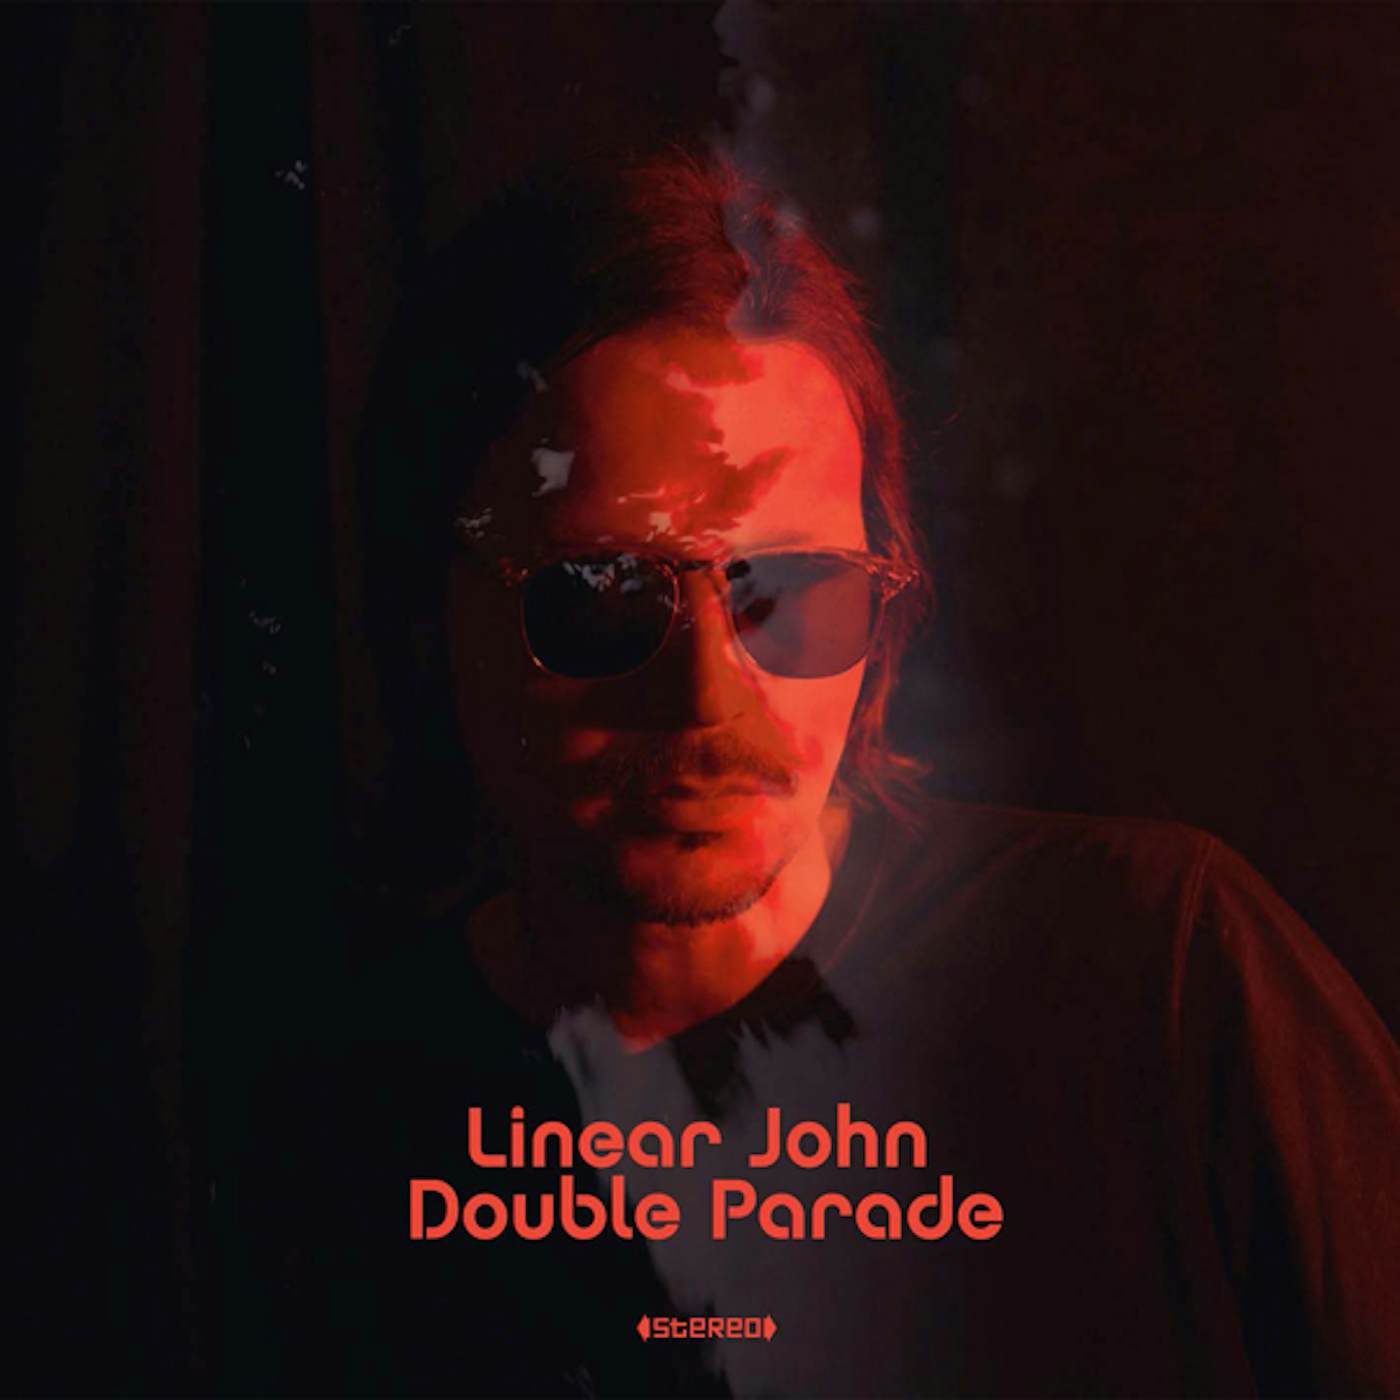 Linear John Double Parade Vinyl Record